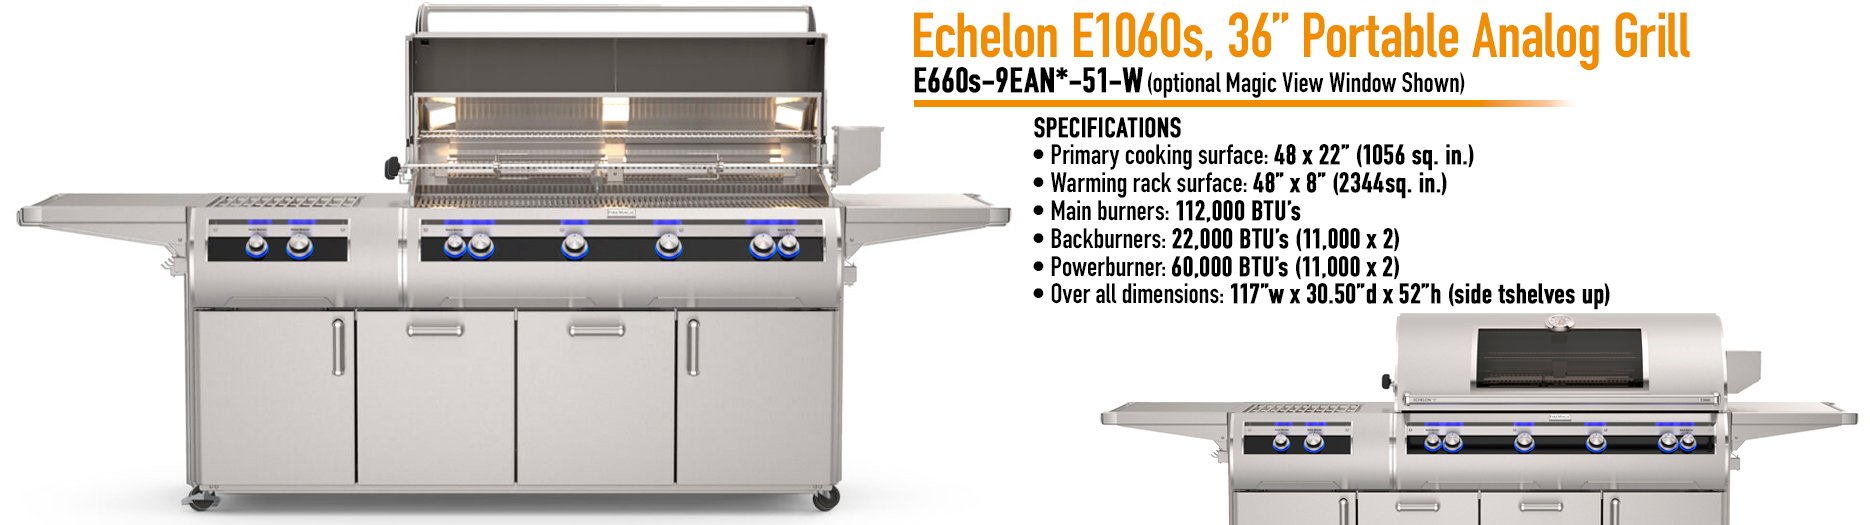 Fire Magic Analog Echelon Diamond Series E1060 Cabinet Grill with Power Burner